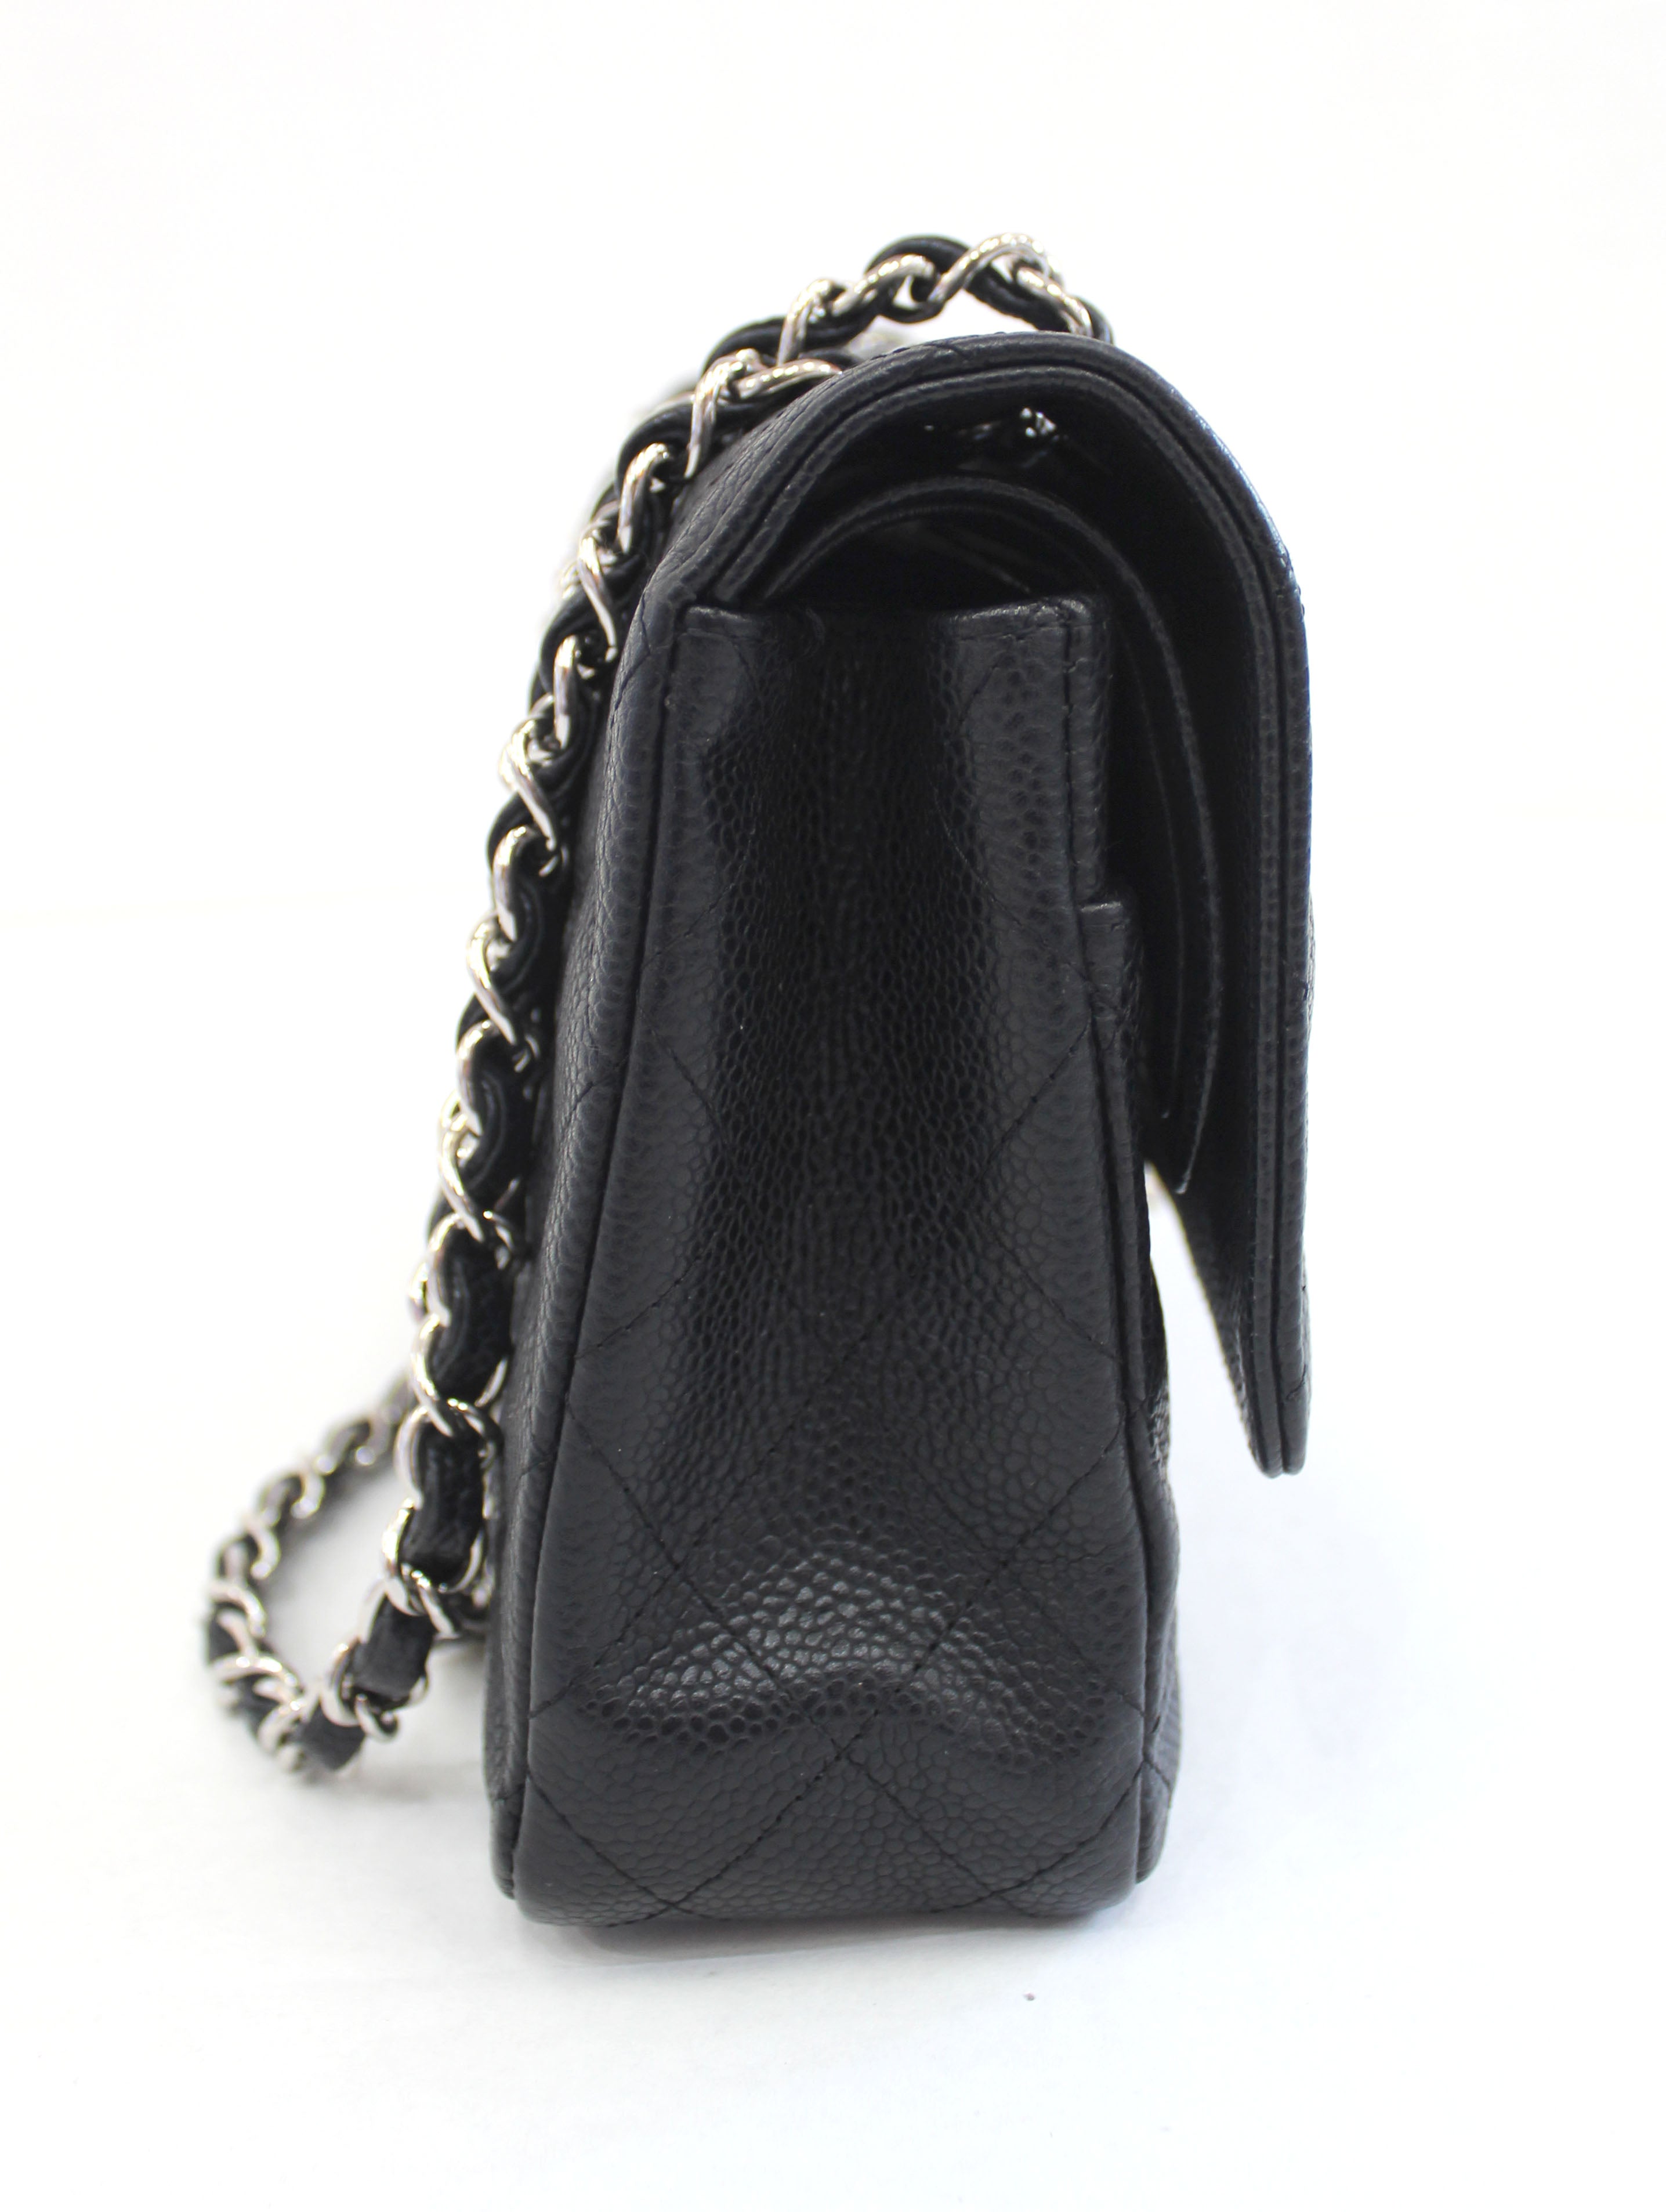 Authentic Chanel Classic Black Caviar Leather Medium Double Flap bag